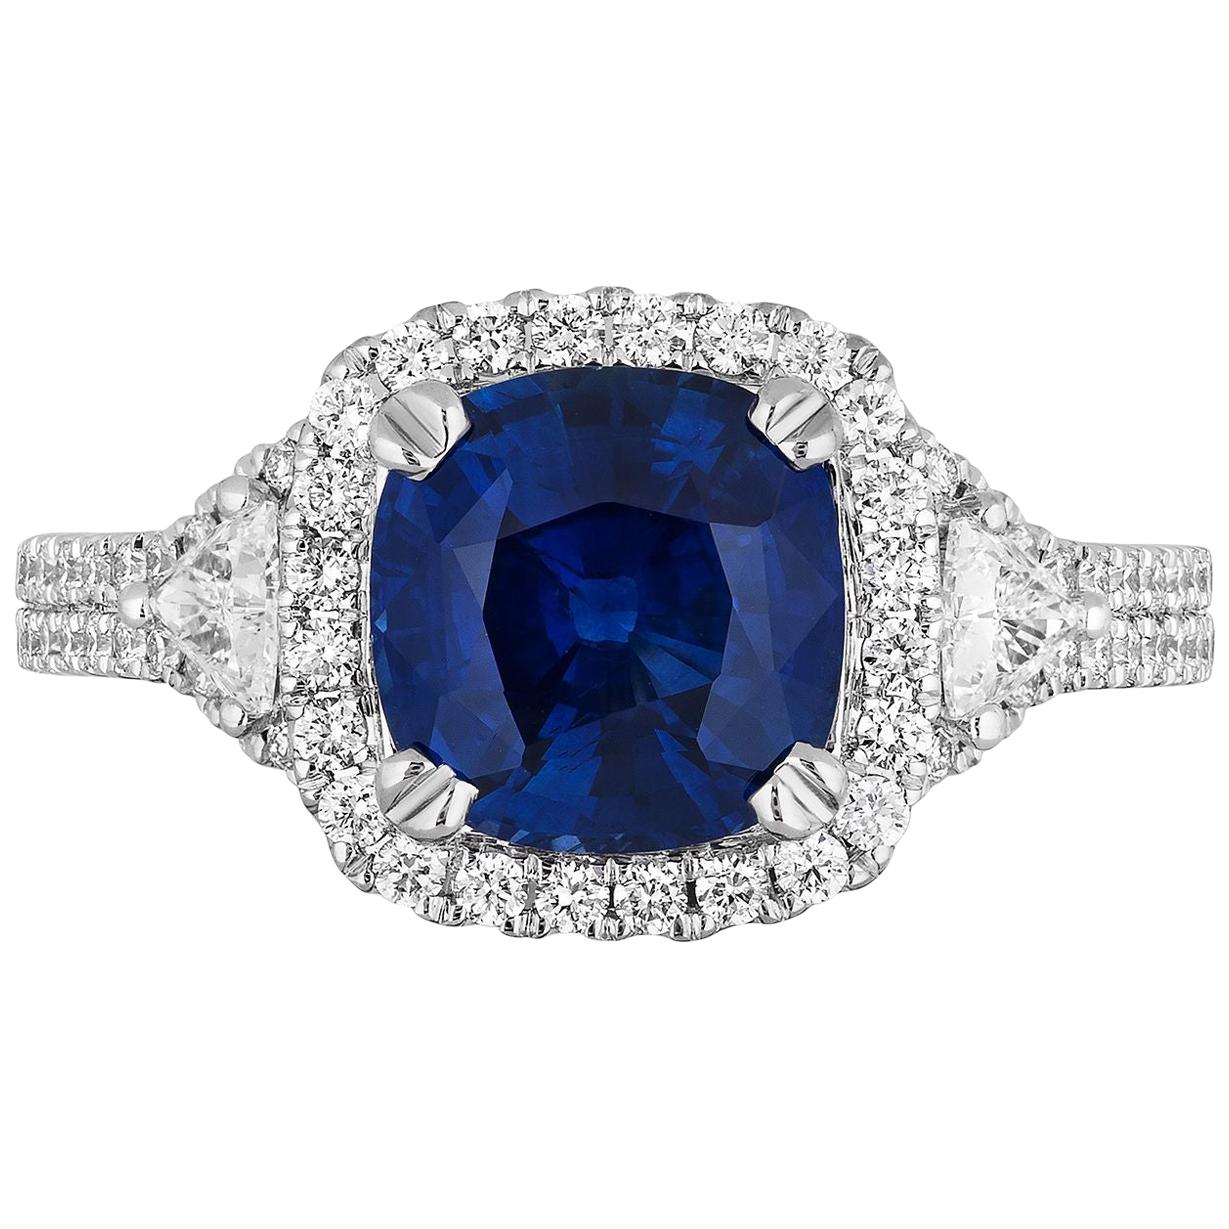 2.68 Carat Sapphire Diamond Cocktail Ring